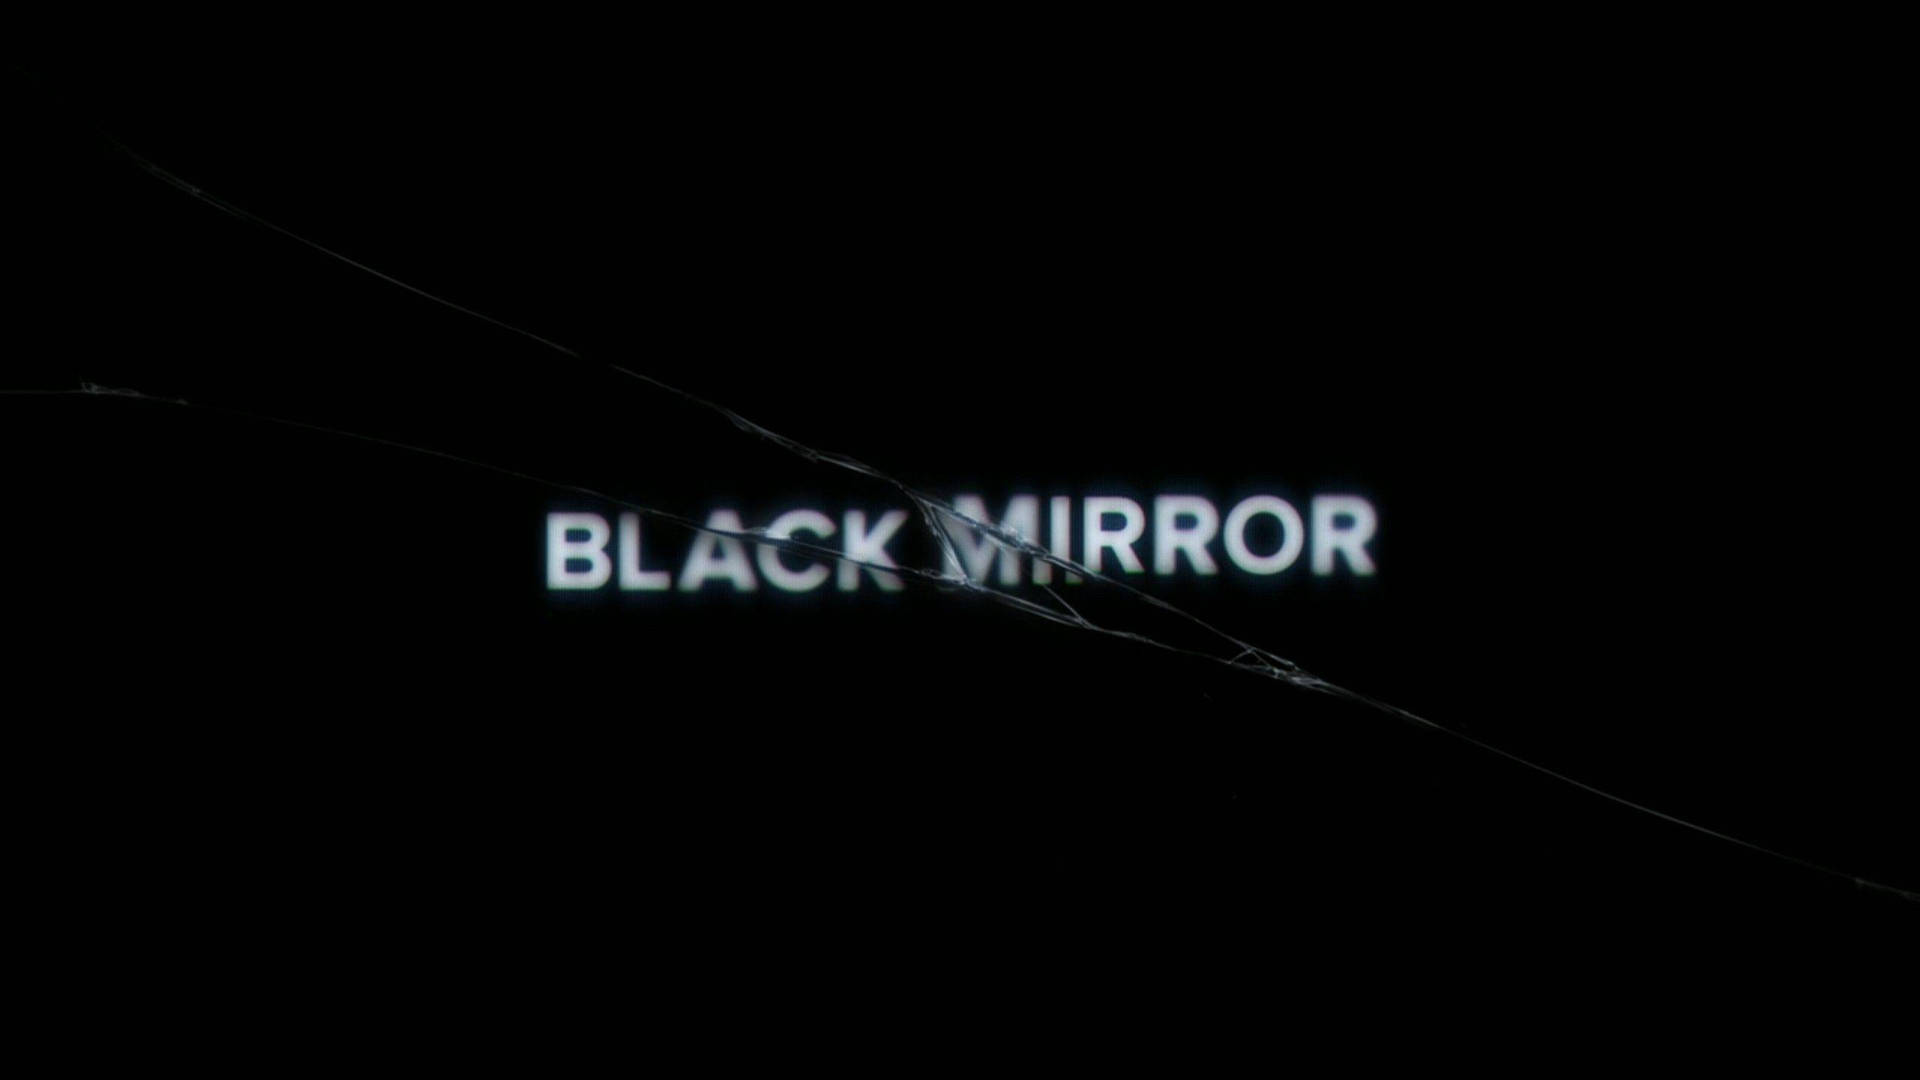 Black Mirror Lettering With Broken Glass Effects Wallpaper